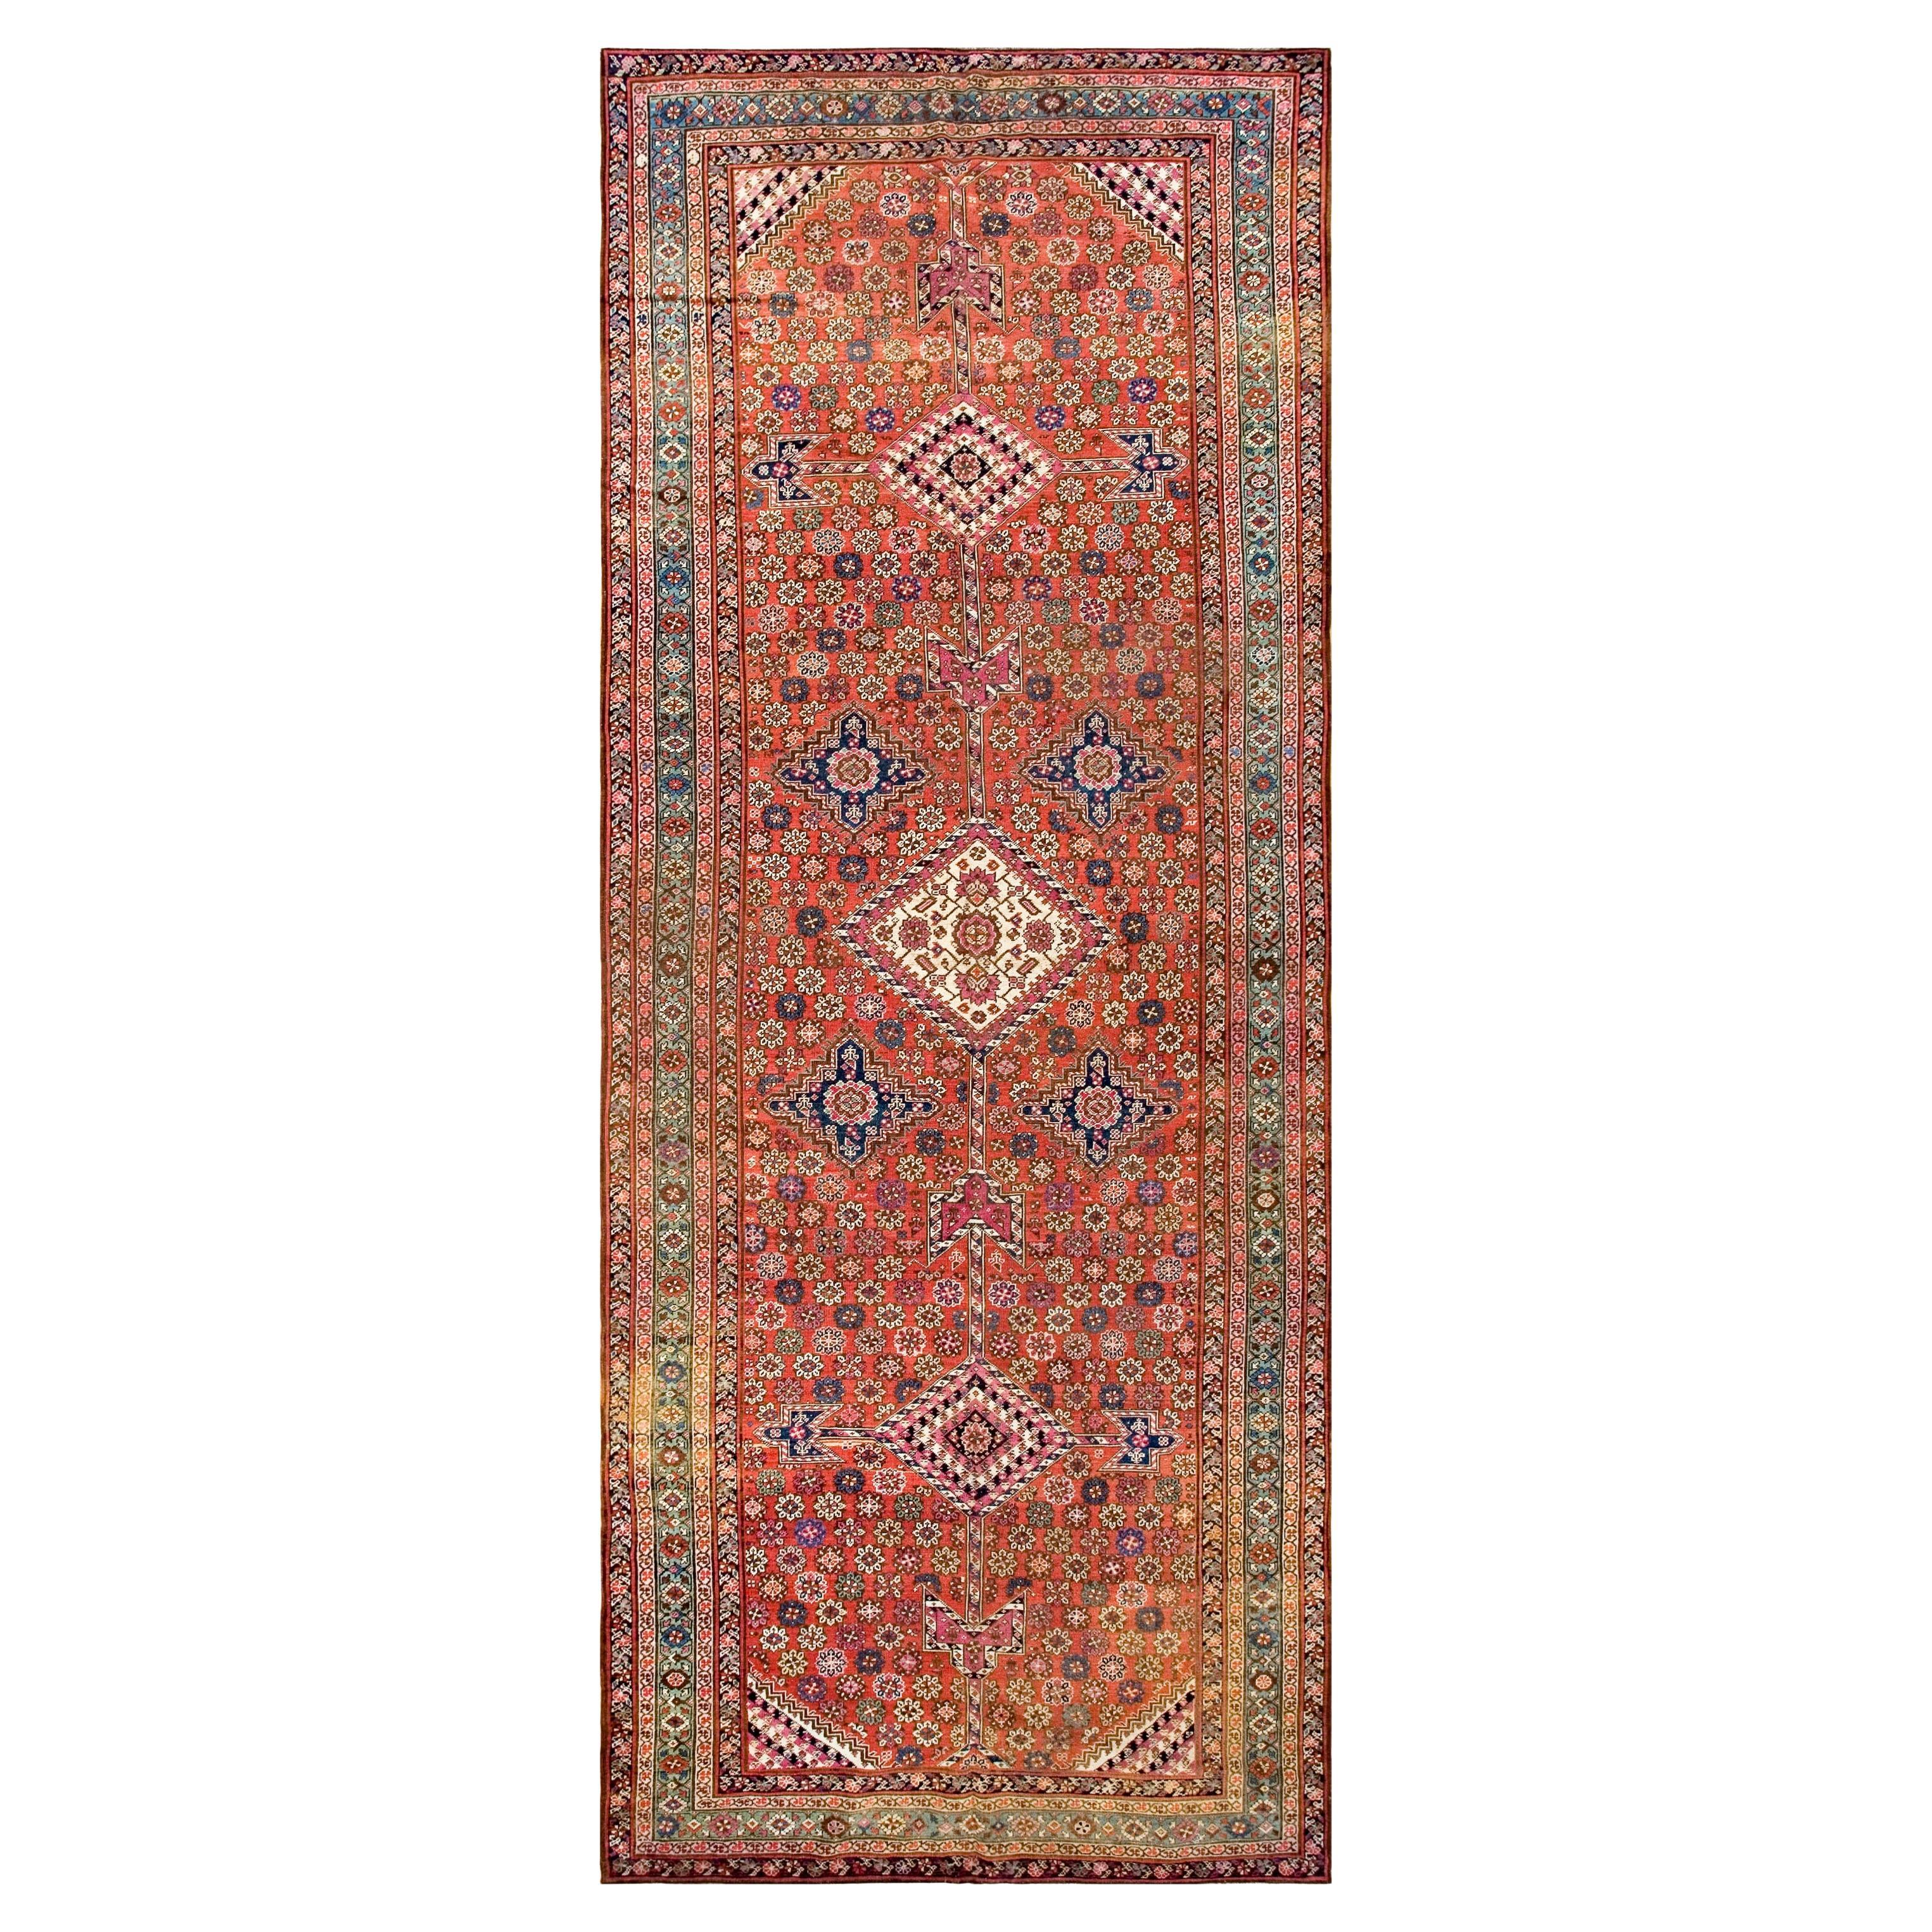 19th Century NW Persian Bakshaiesh Gallery Carpet ( 6'8" x 17' - 203 x 518 cm ) For Sale